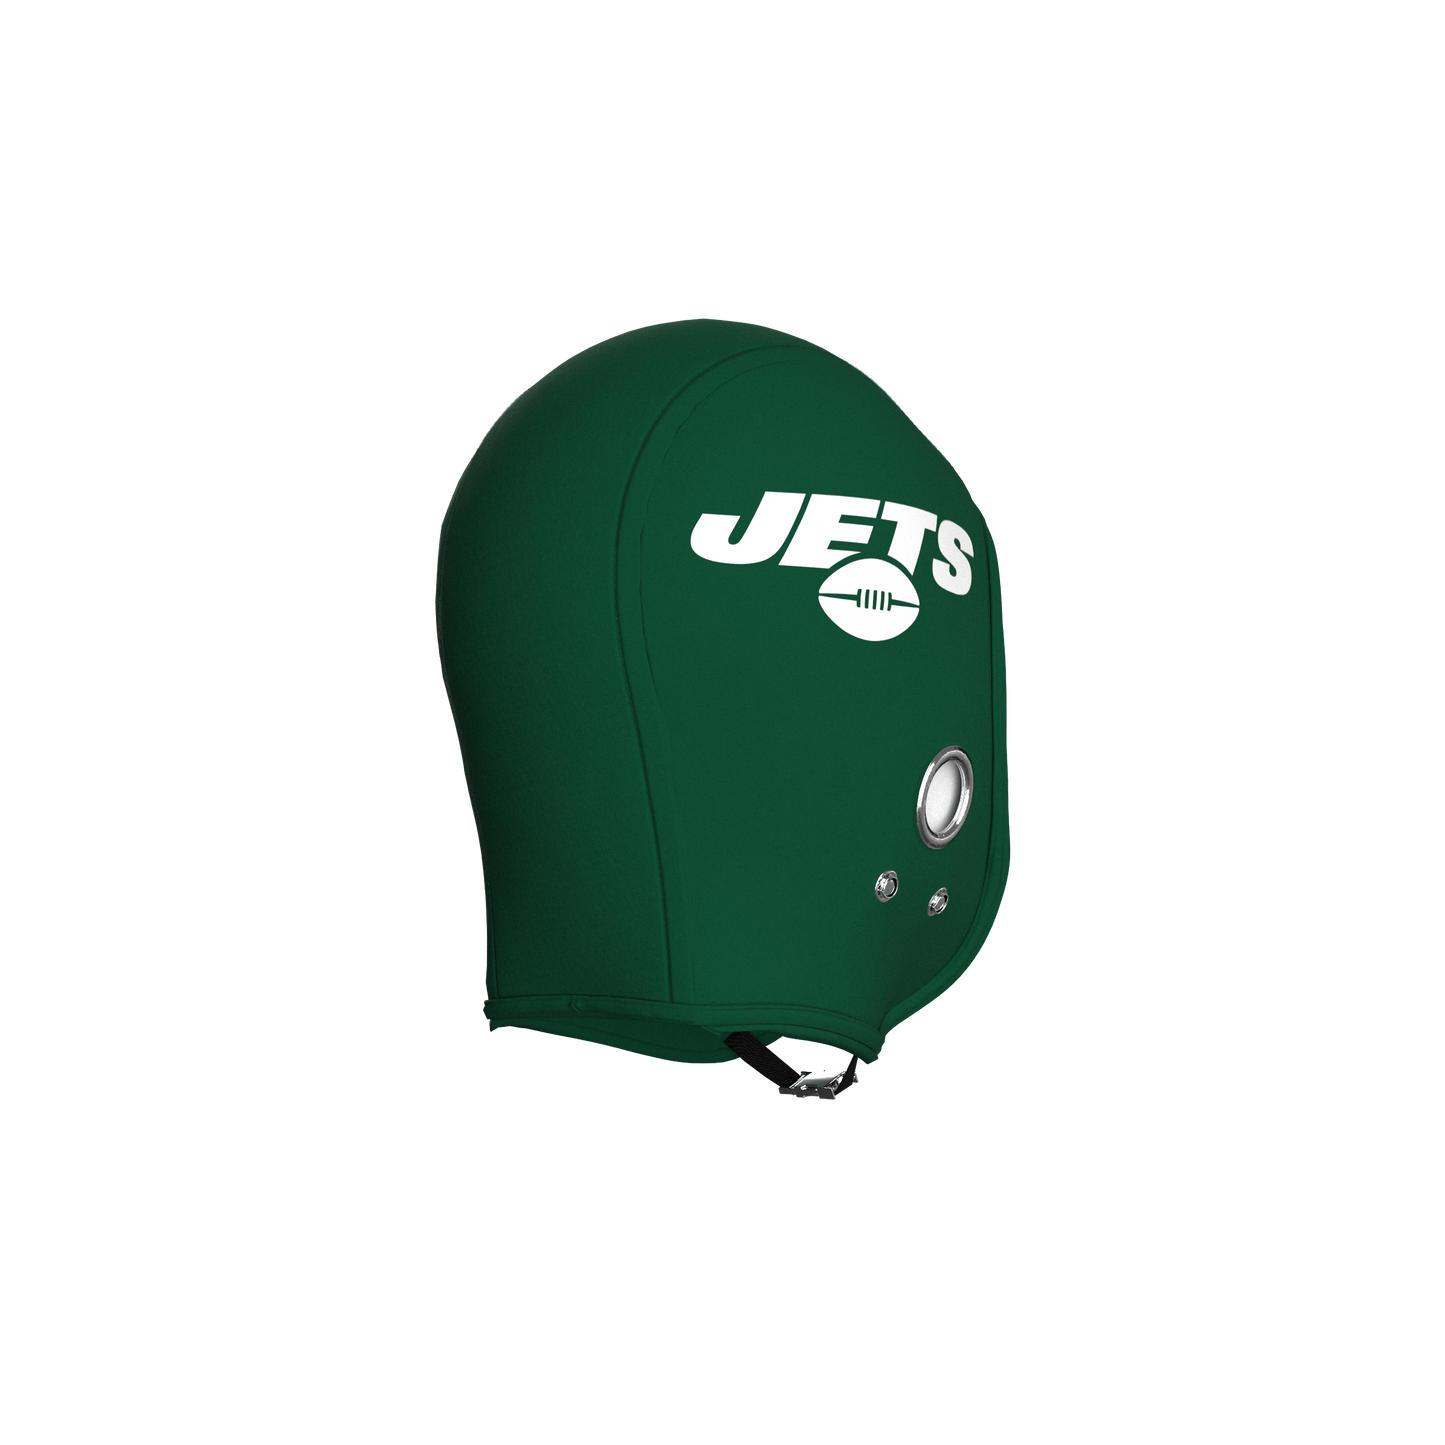 New York Jets Football Hood (youth)